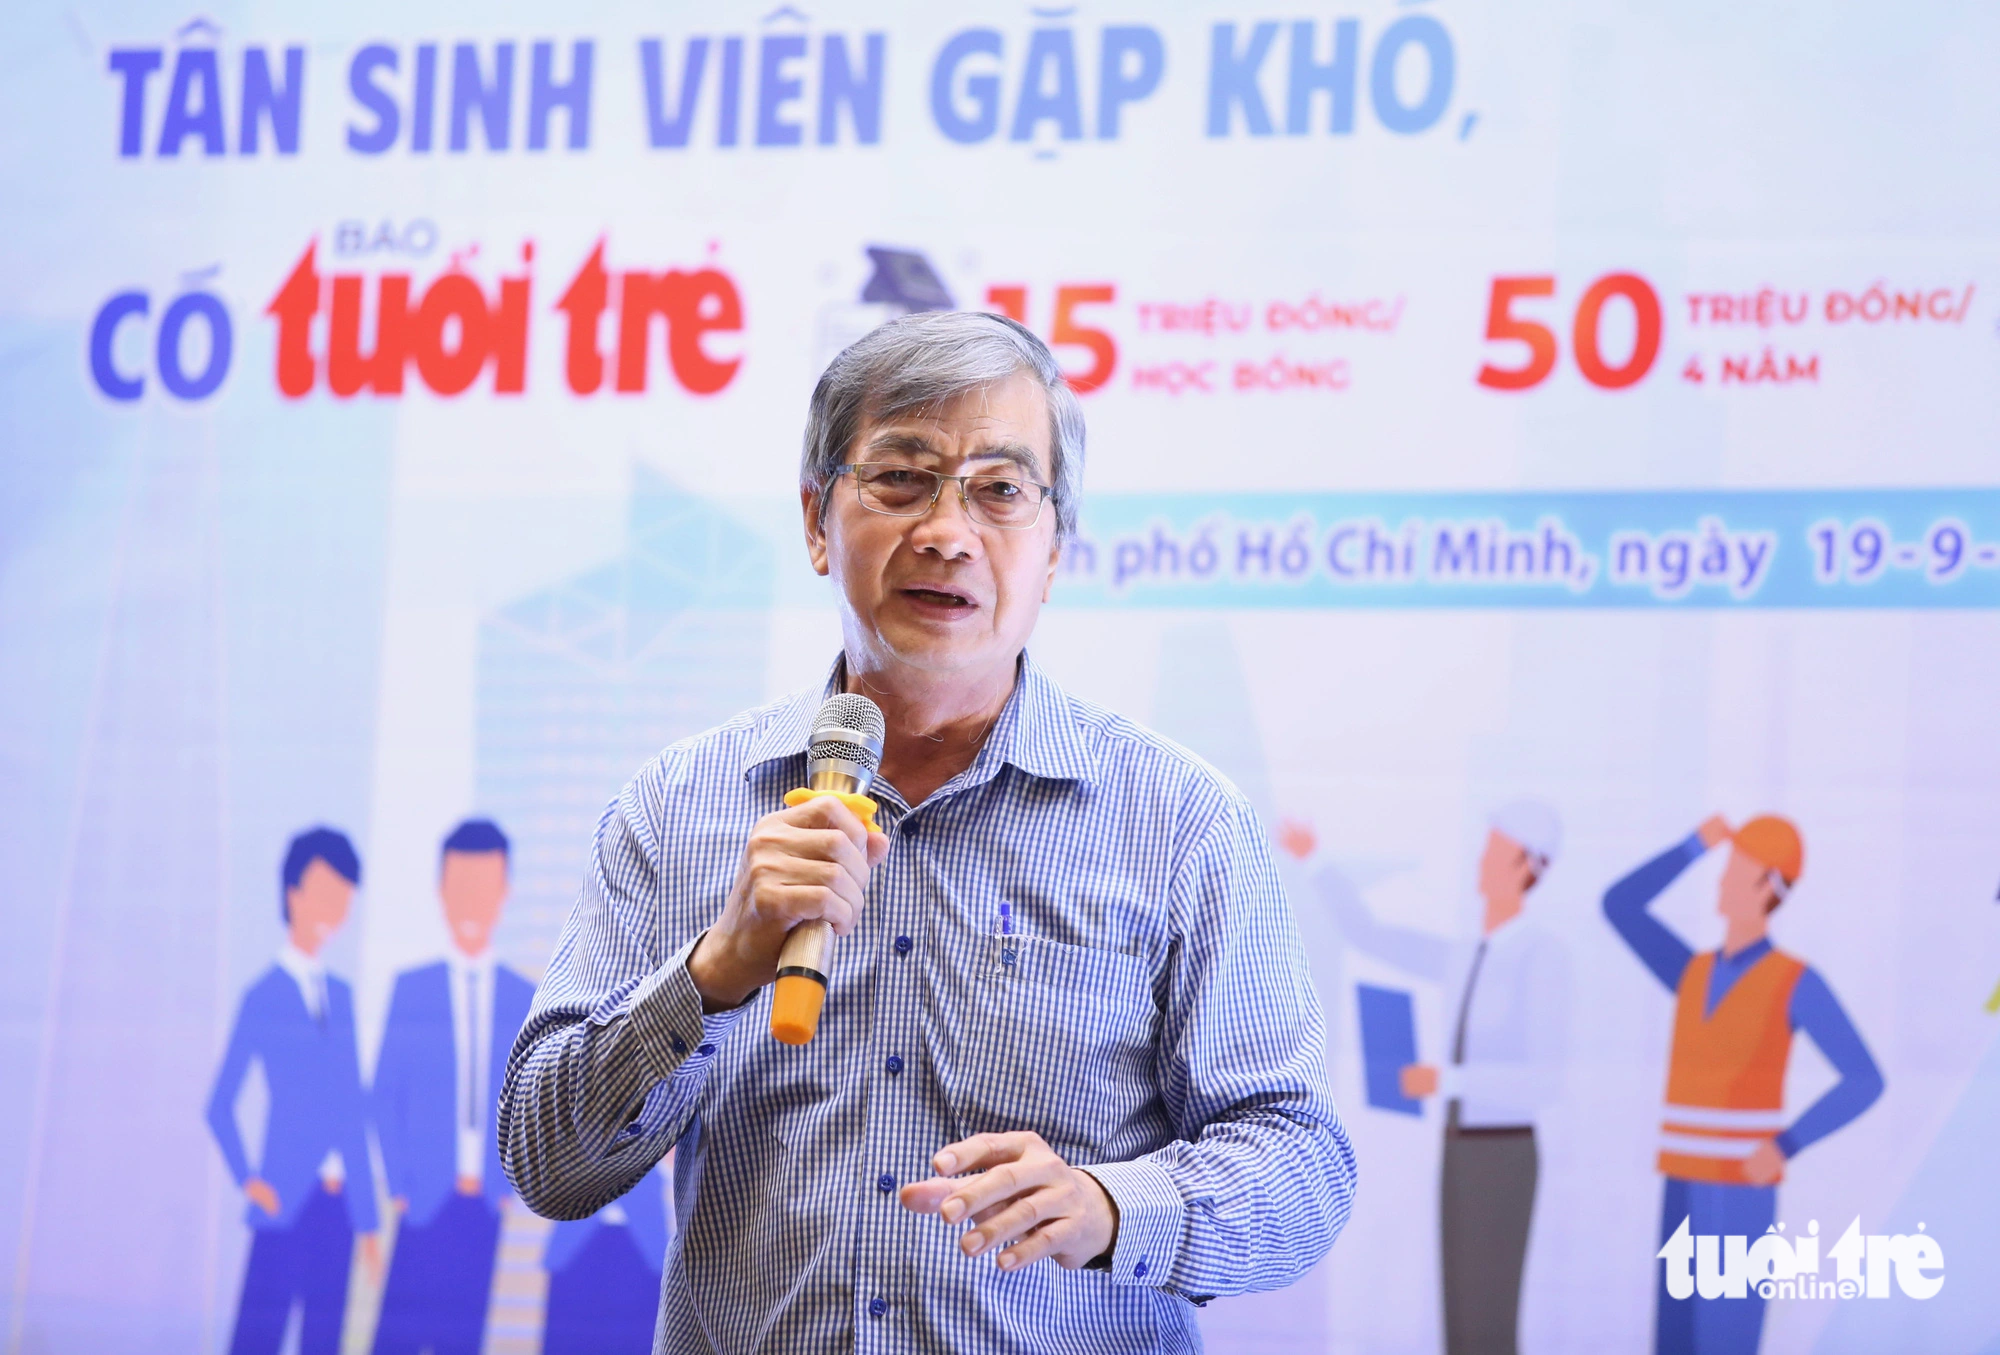 Mr. Nguyen Kim Lan - 